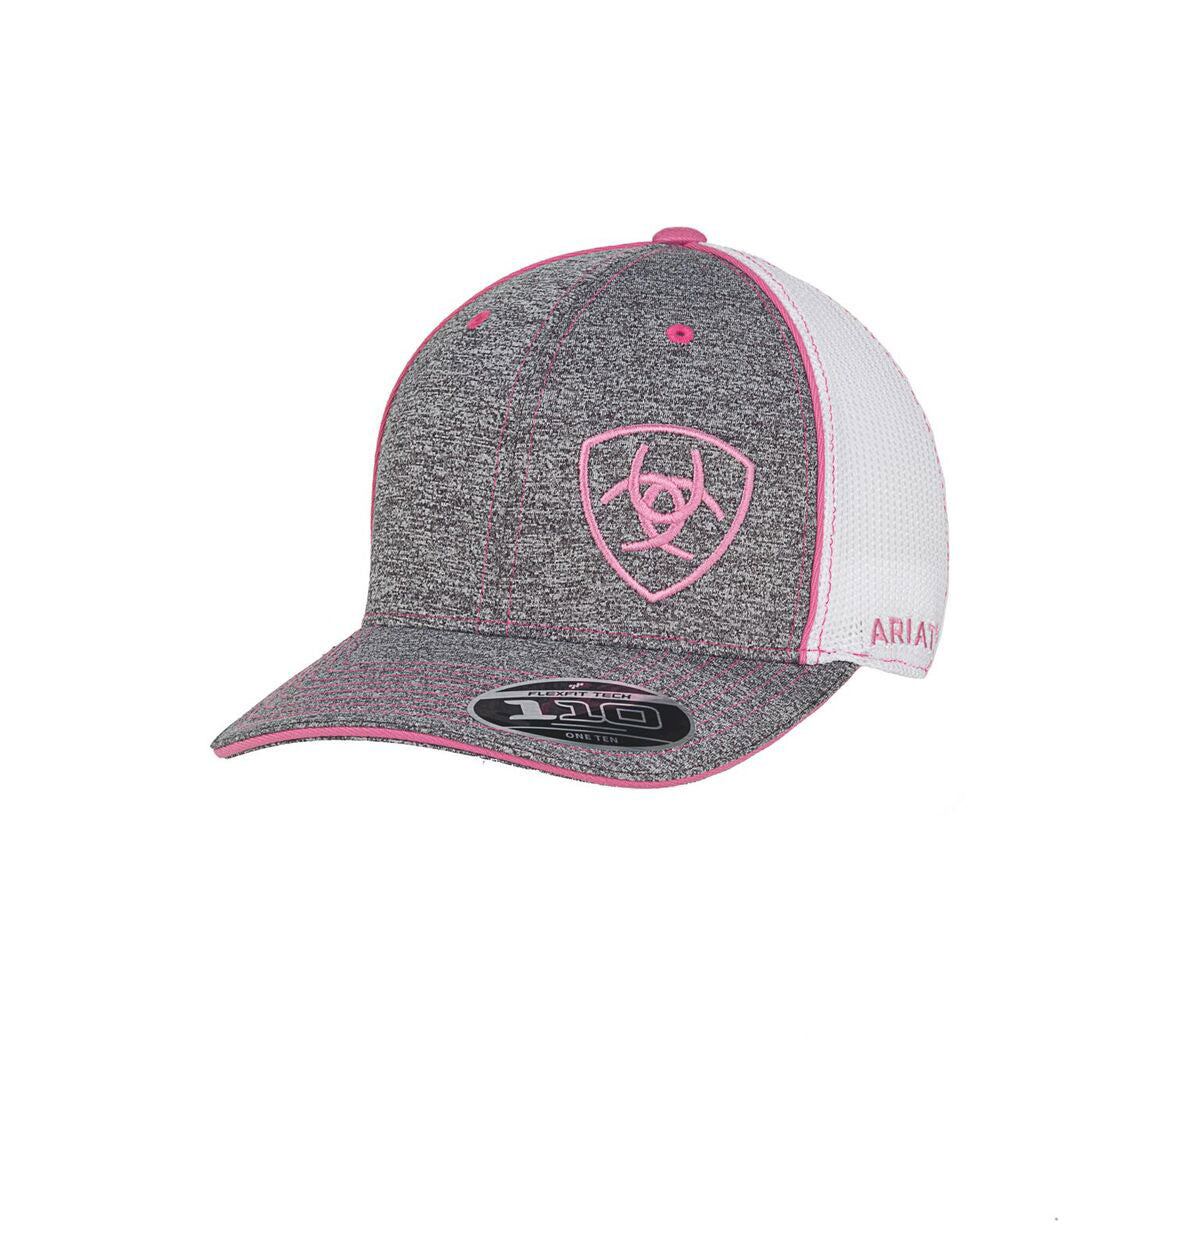 Ariat Gray/Pink Cap